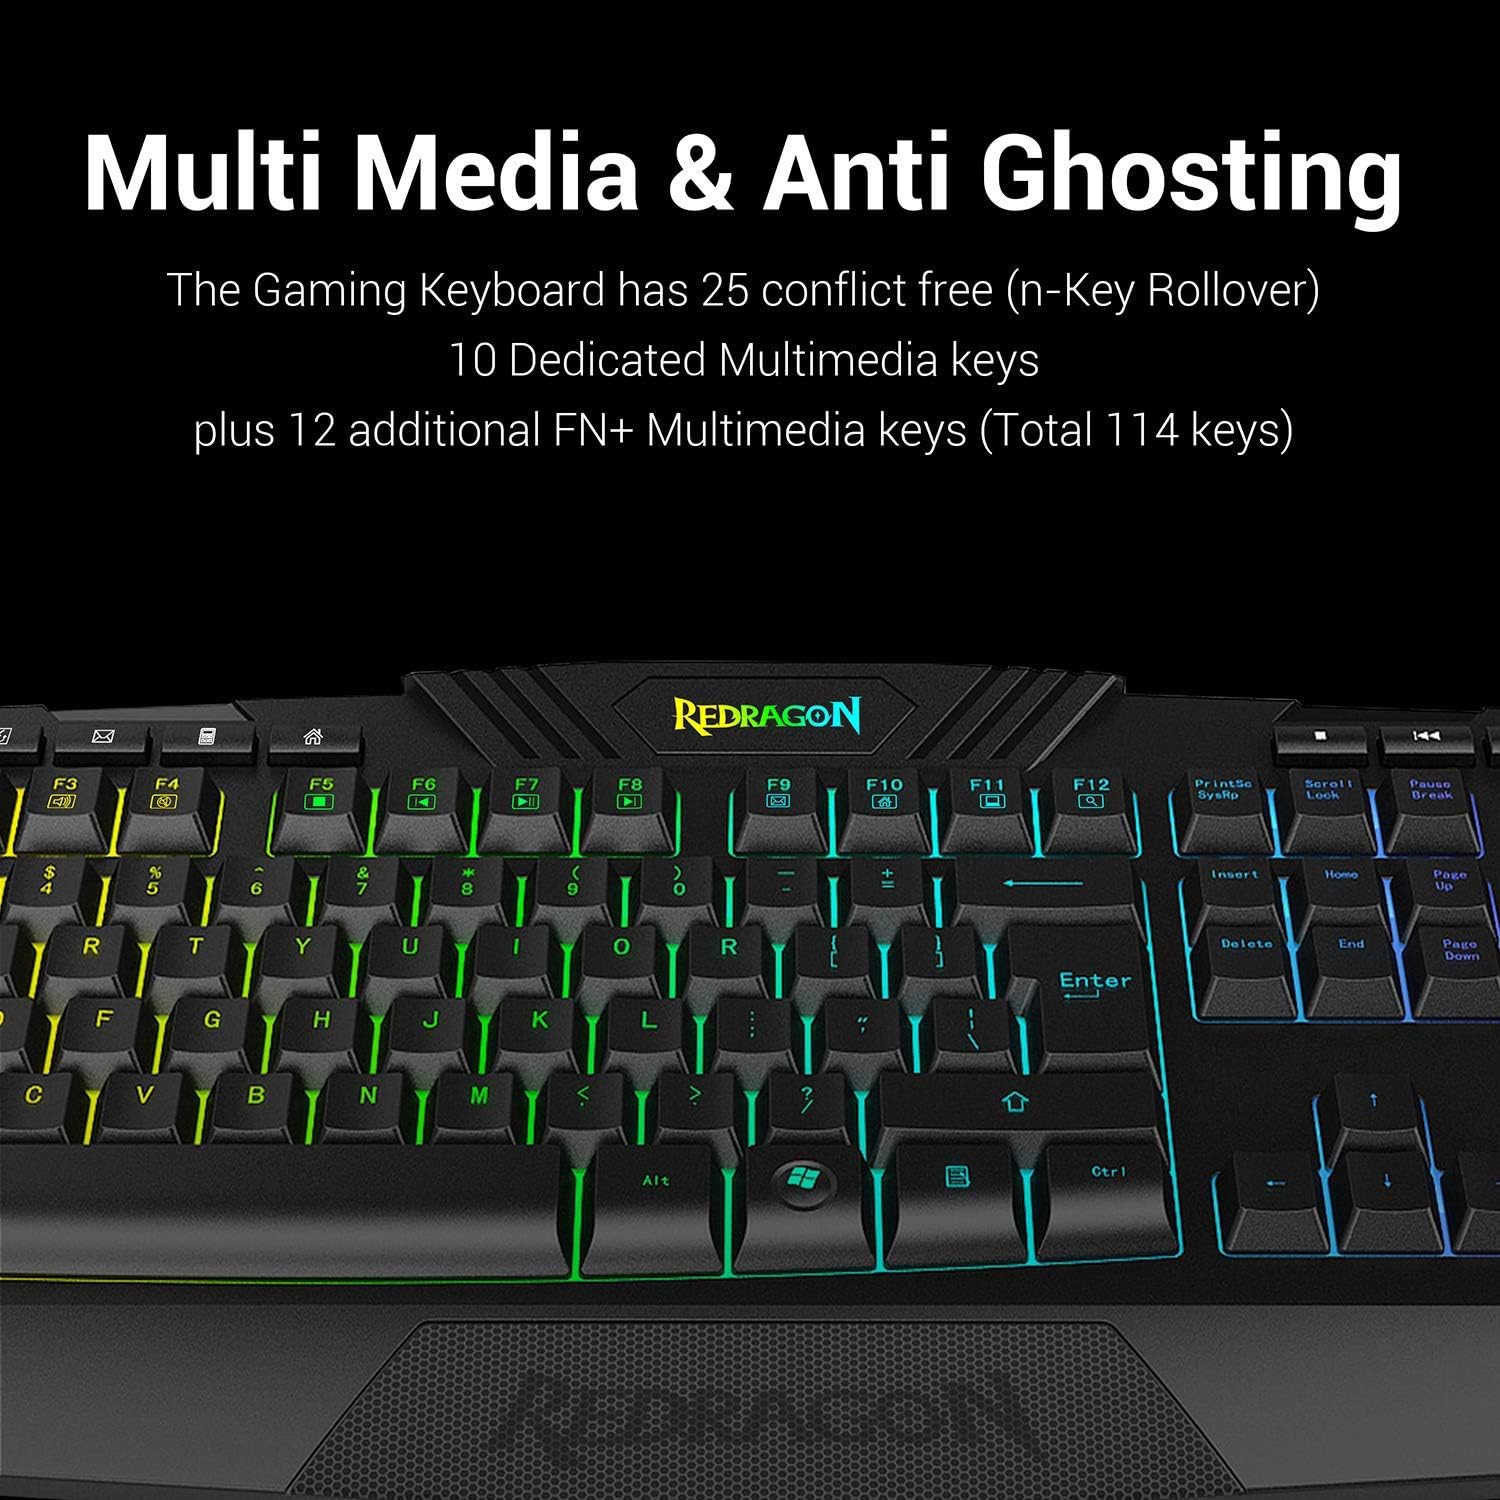 Redragon S101 Gaming Keyboard review